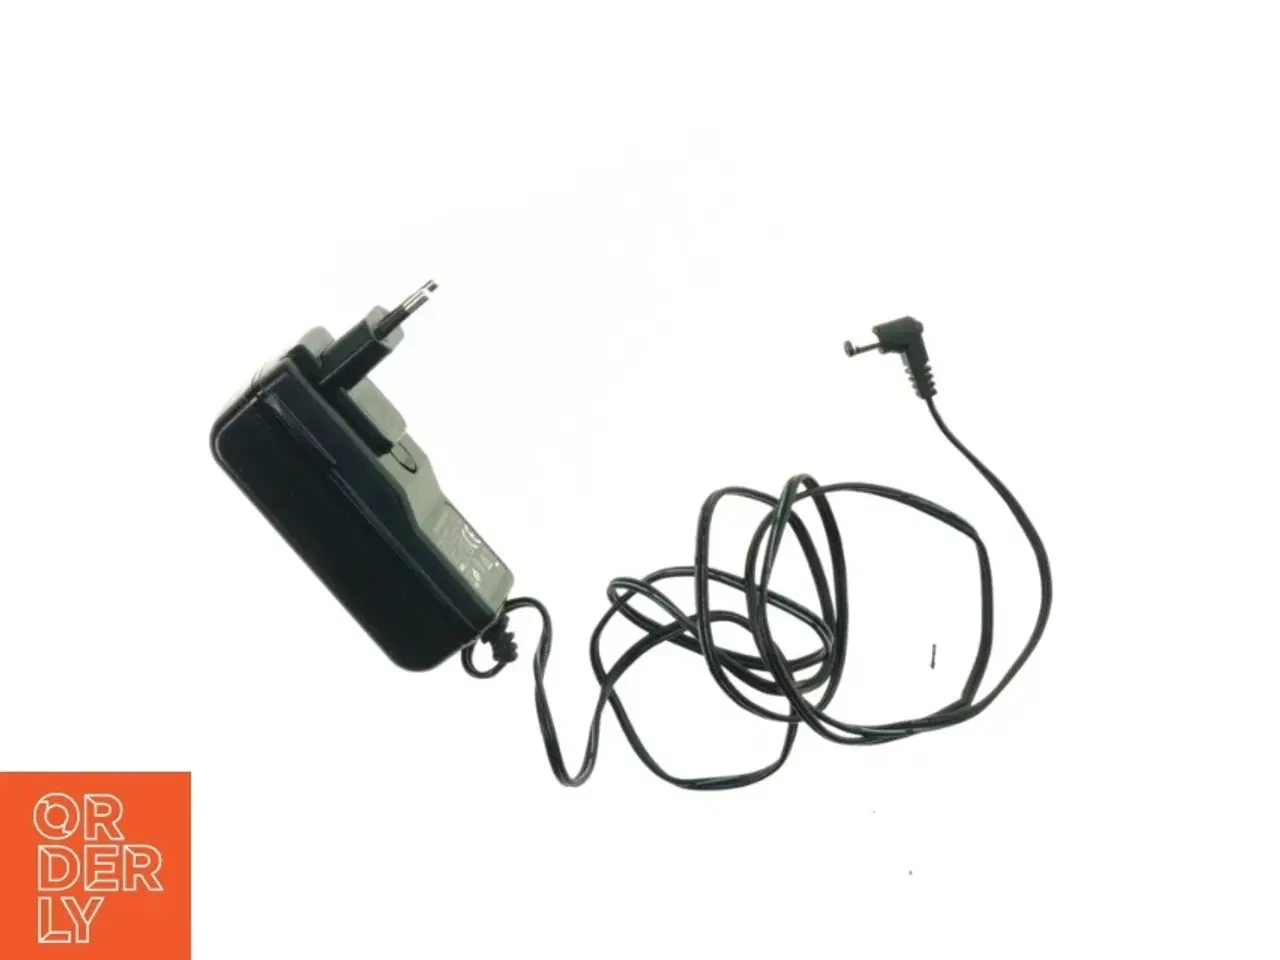 Billede 3 - Switching adaptor fra Culums (str. 10 cm)